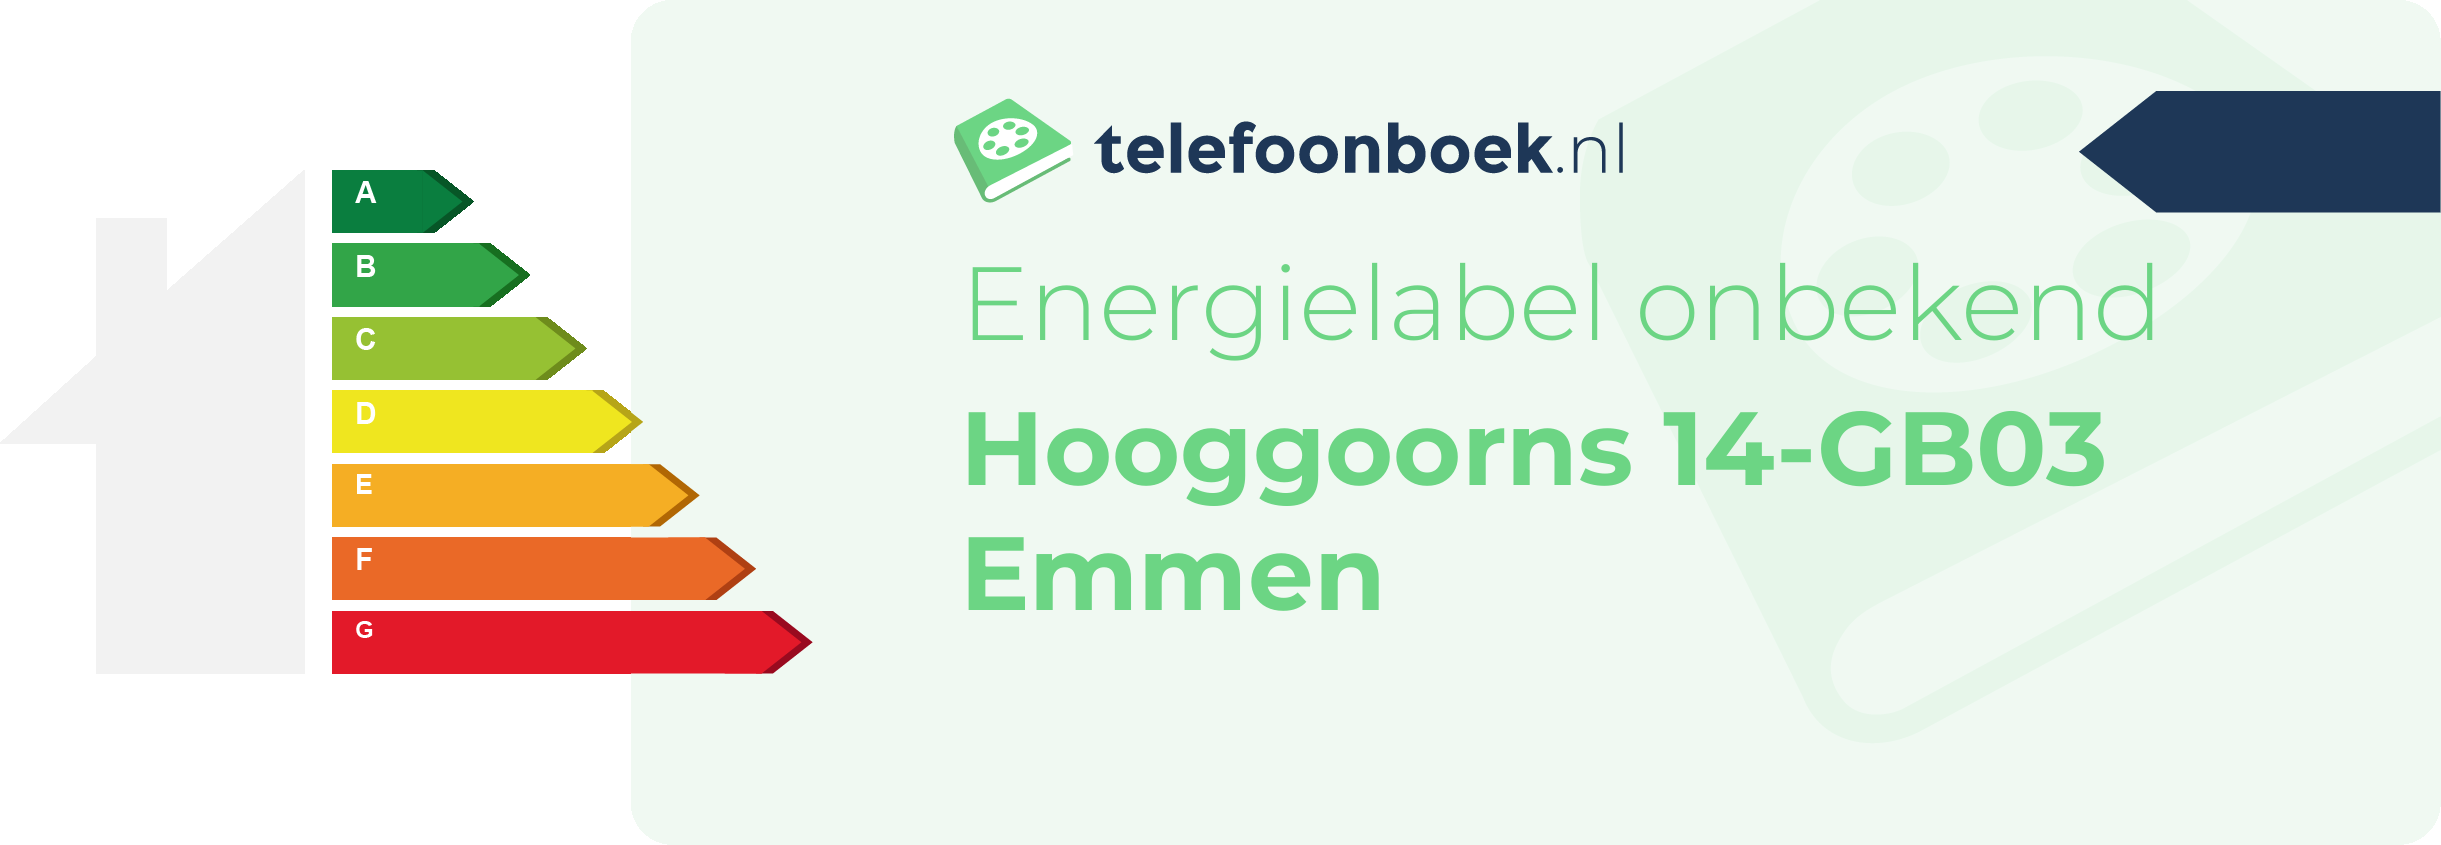 Energielabel Hooggoorns 14-GB03 Emmen